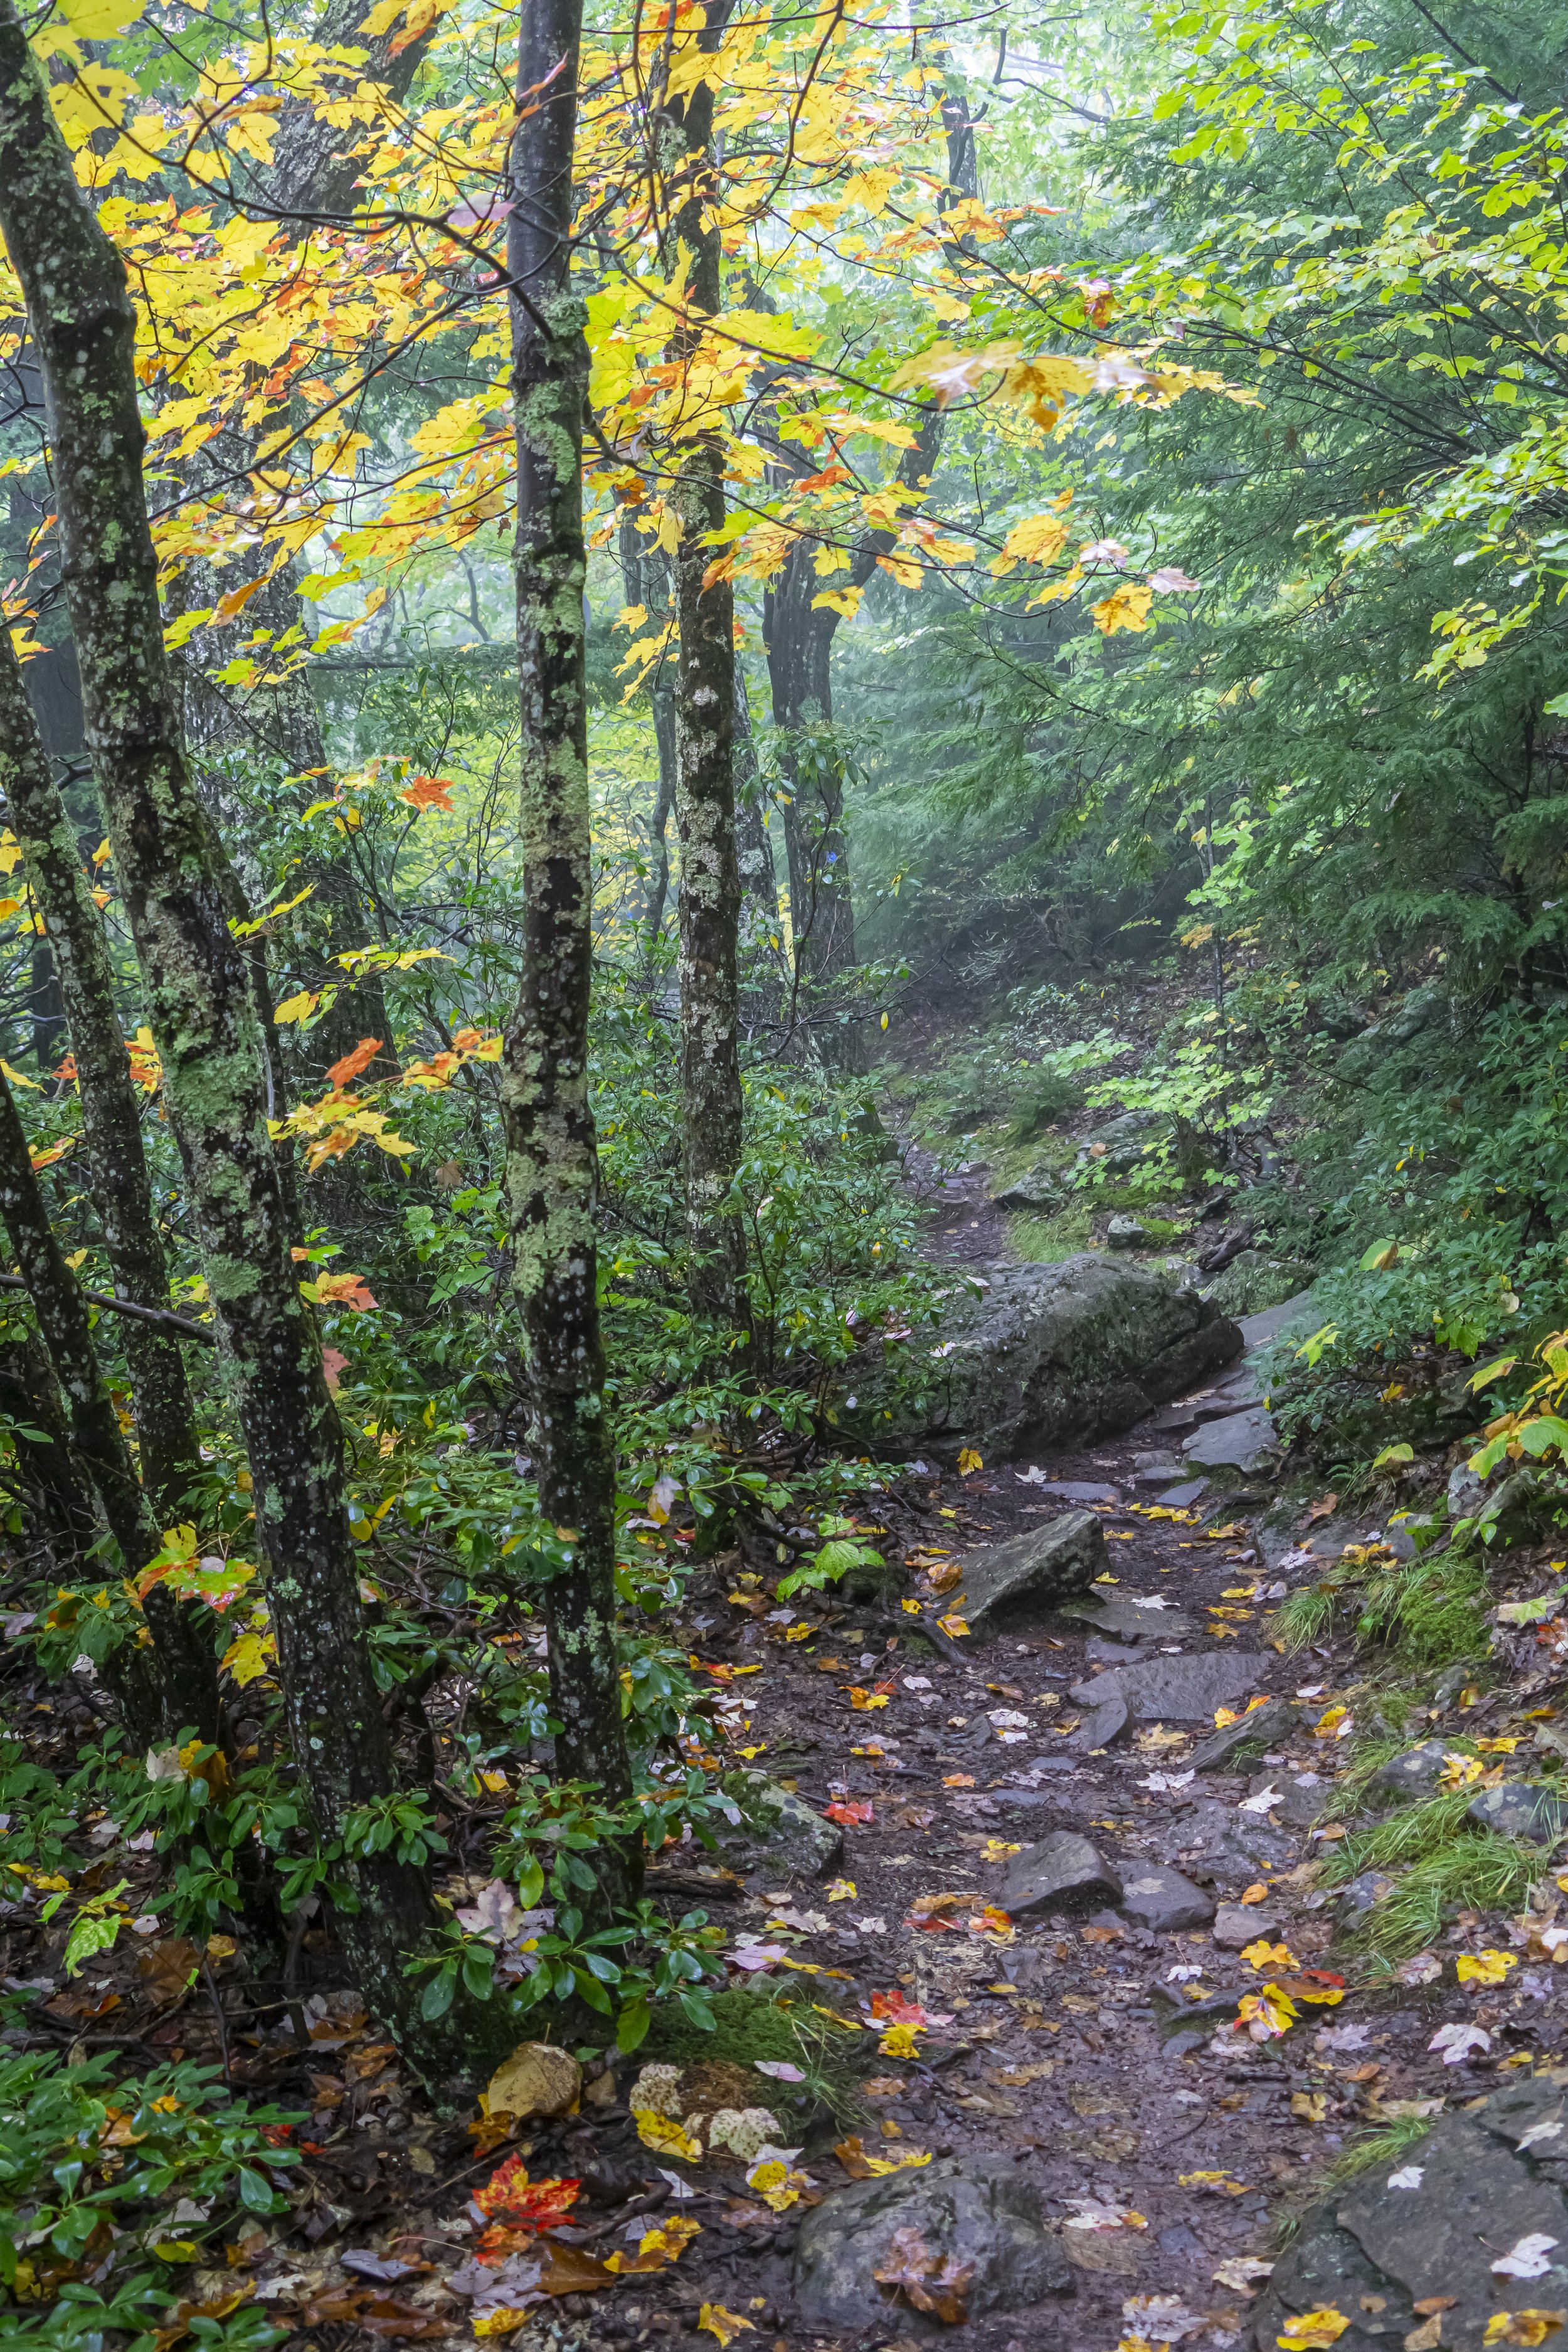 Misty Fall Path